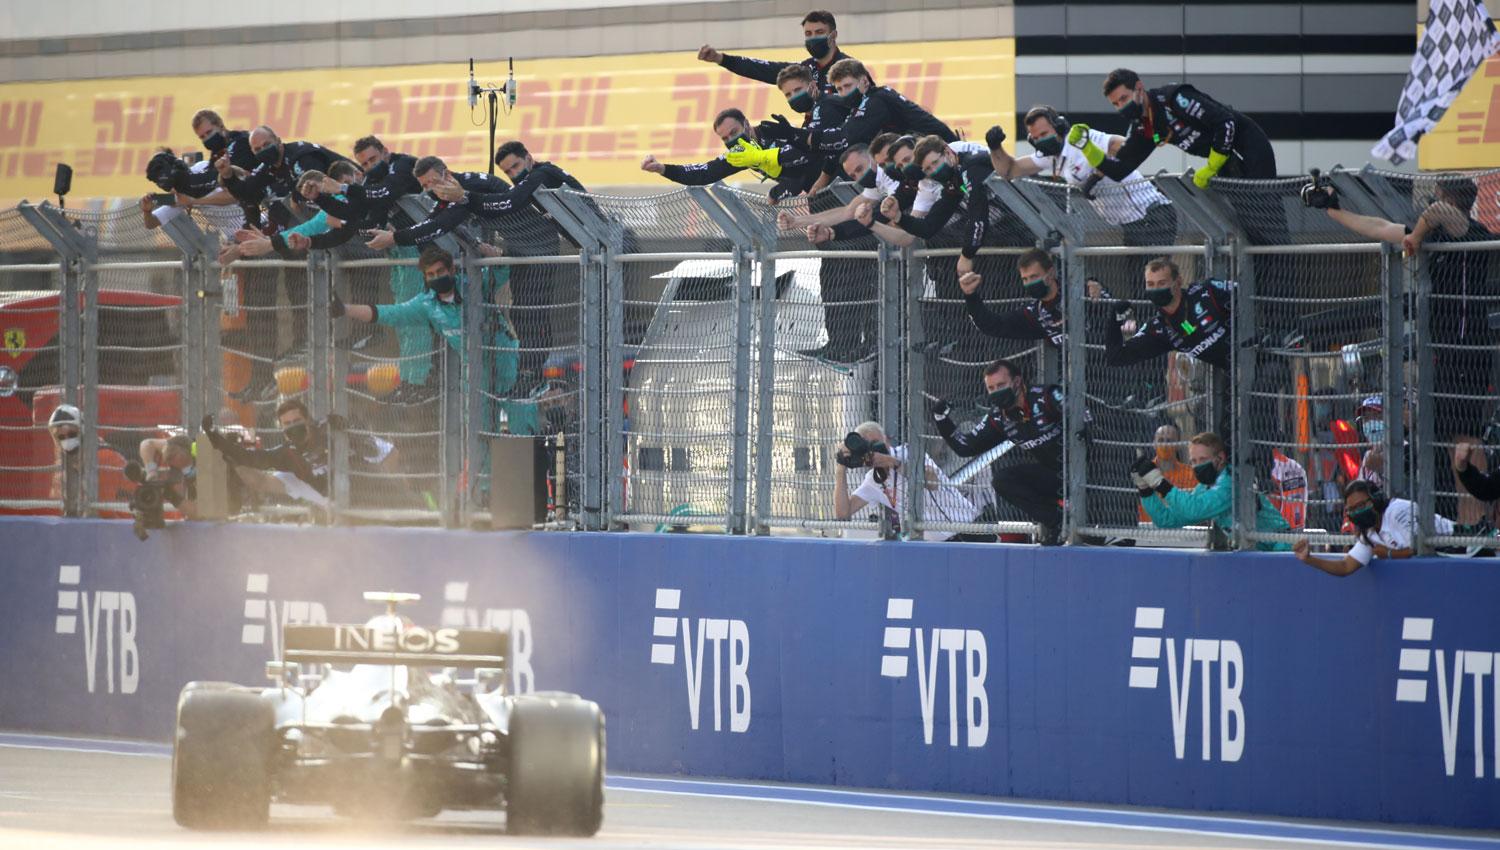 LA META. Bottas cruza la línea de llegada ante la arenga de parte del equipo de Mercedes.